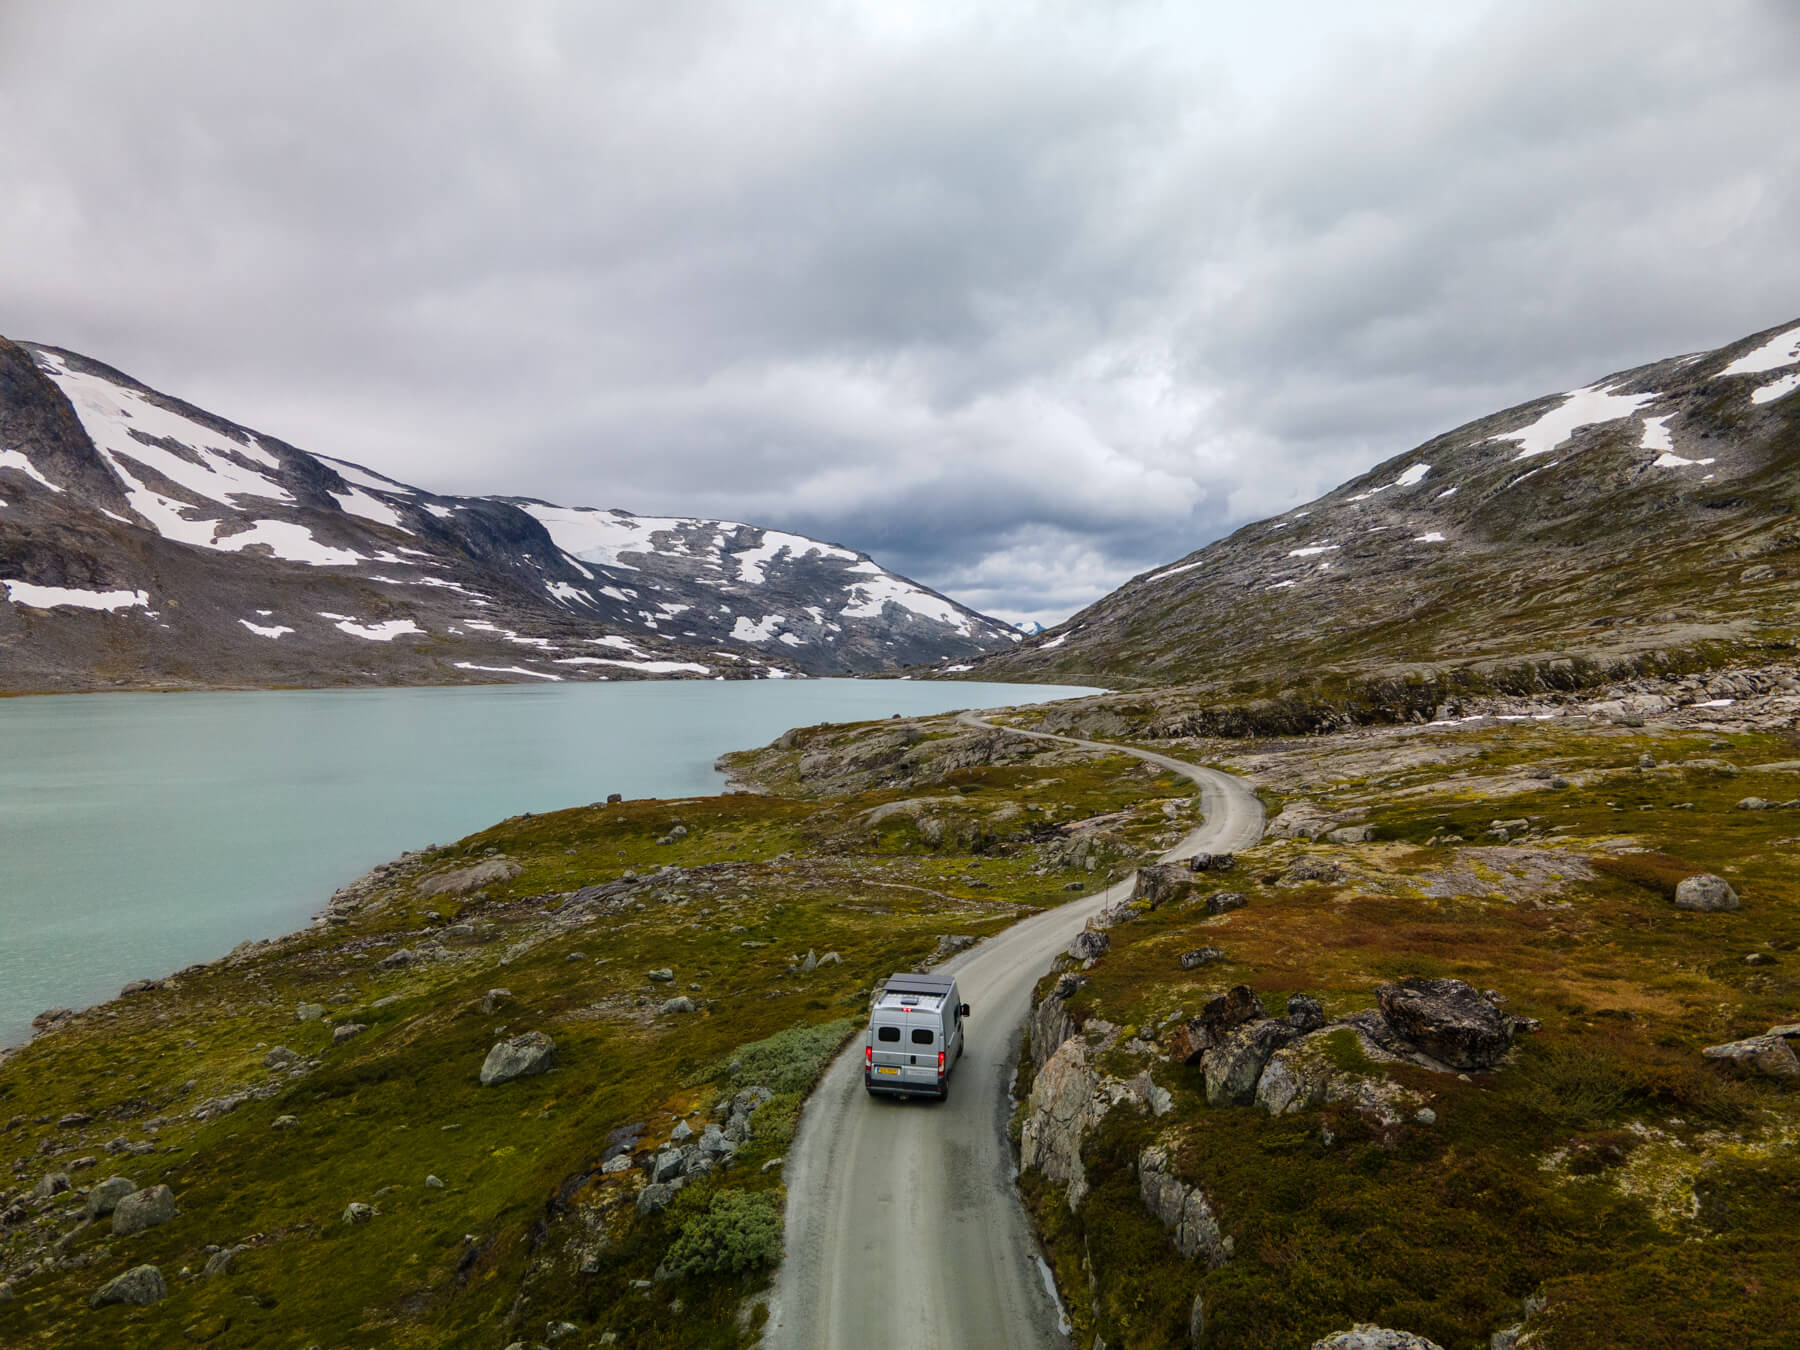 Camper van in Norway